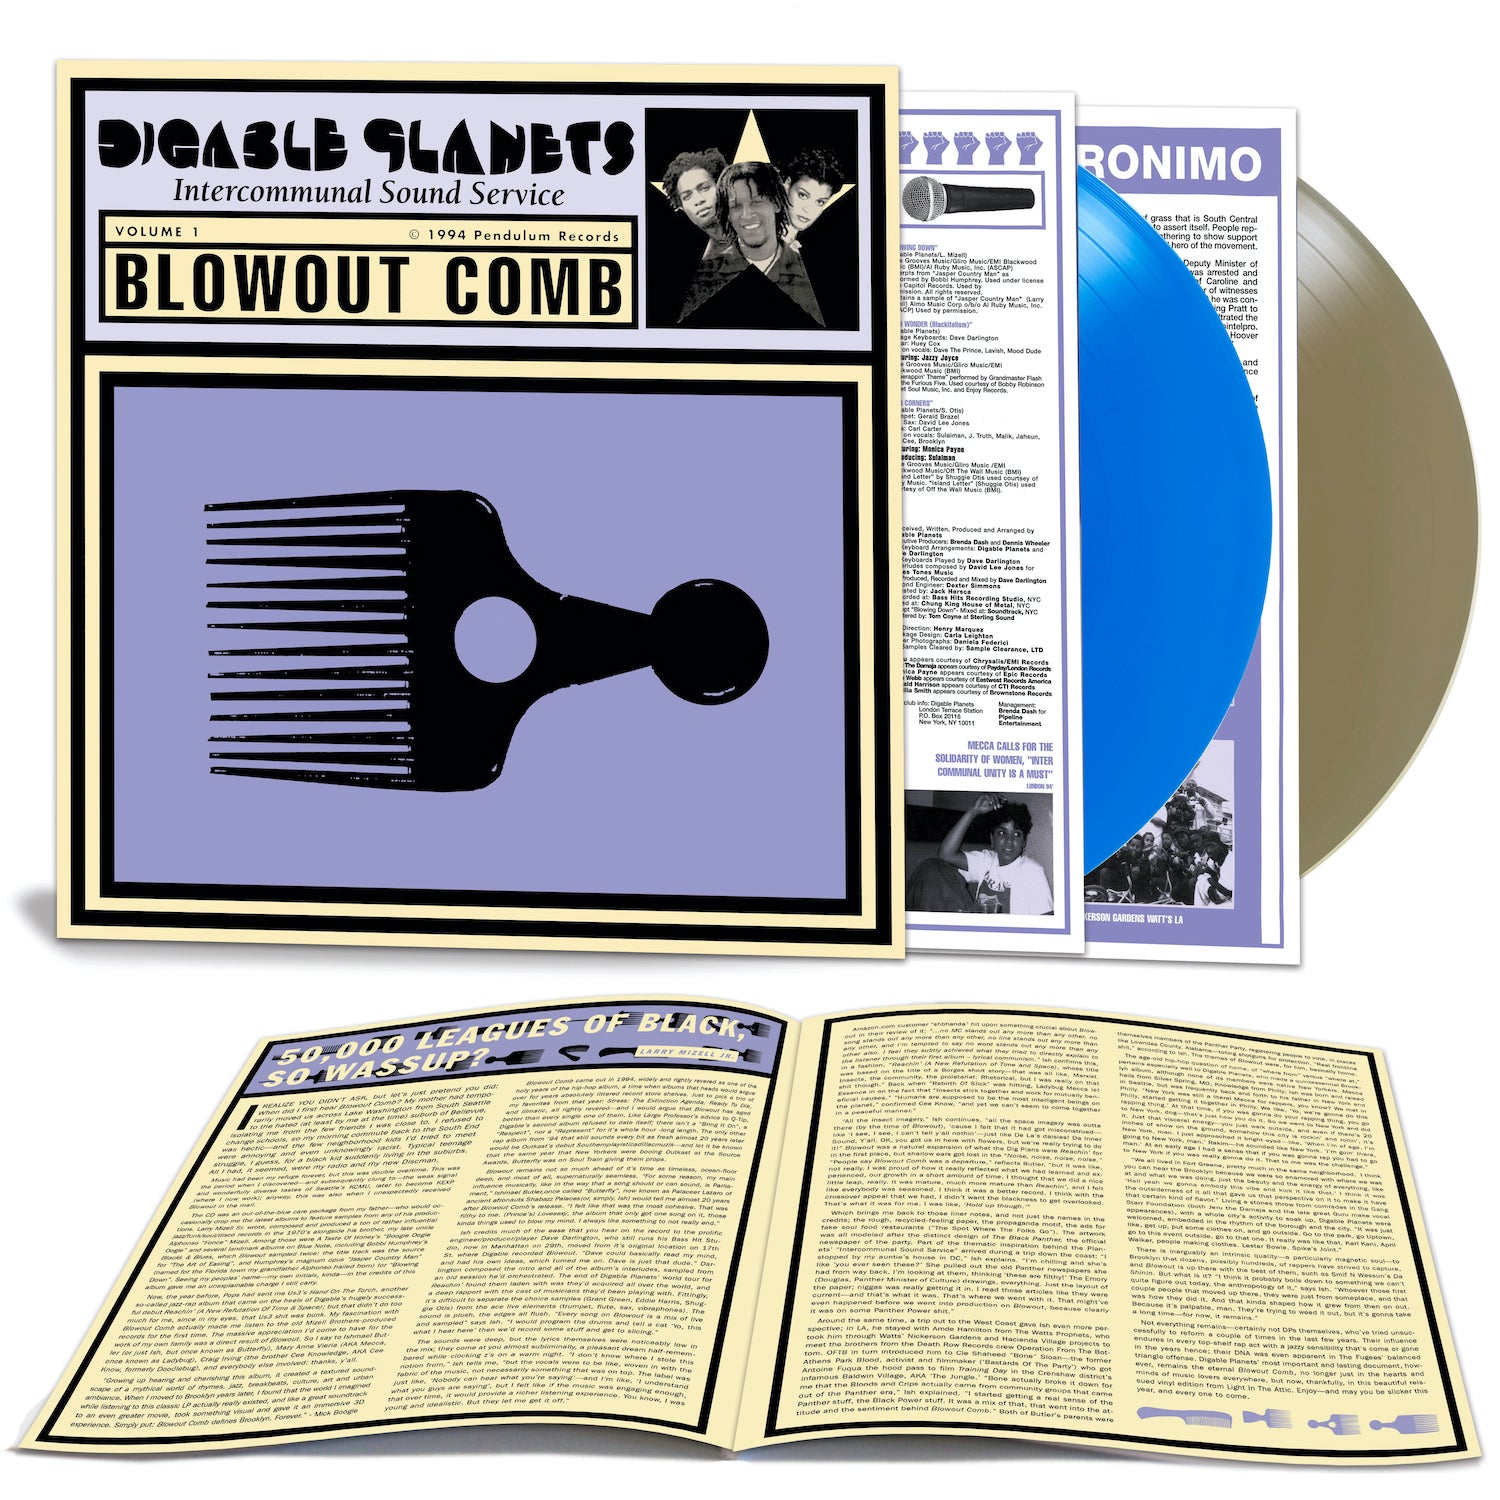 Digable Planets - Blowout Comb [Dazed & Amazed Duo Colored Vinyl]